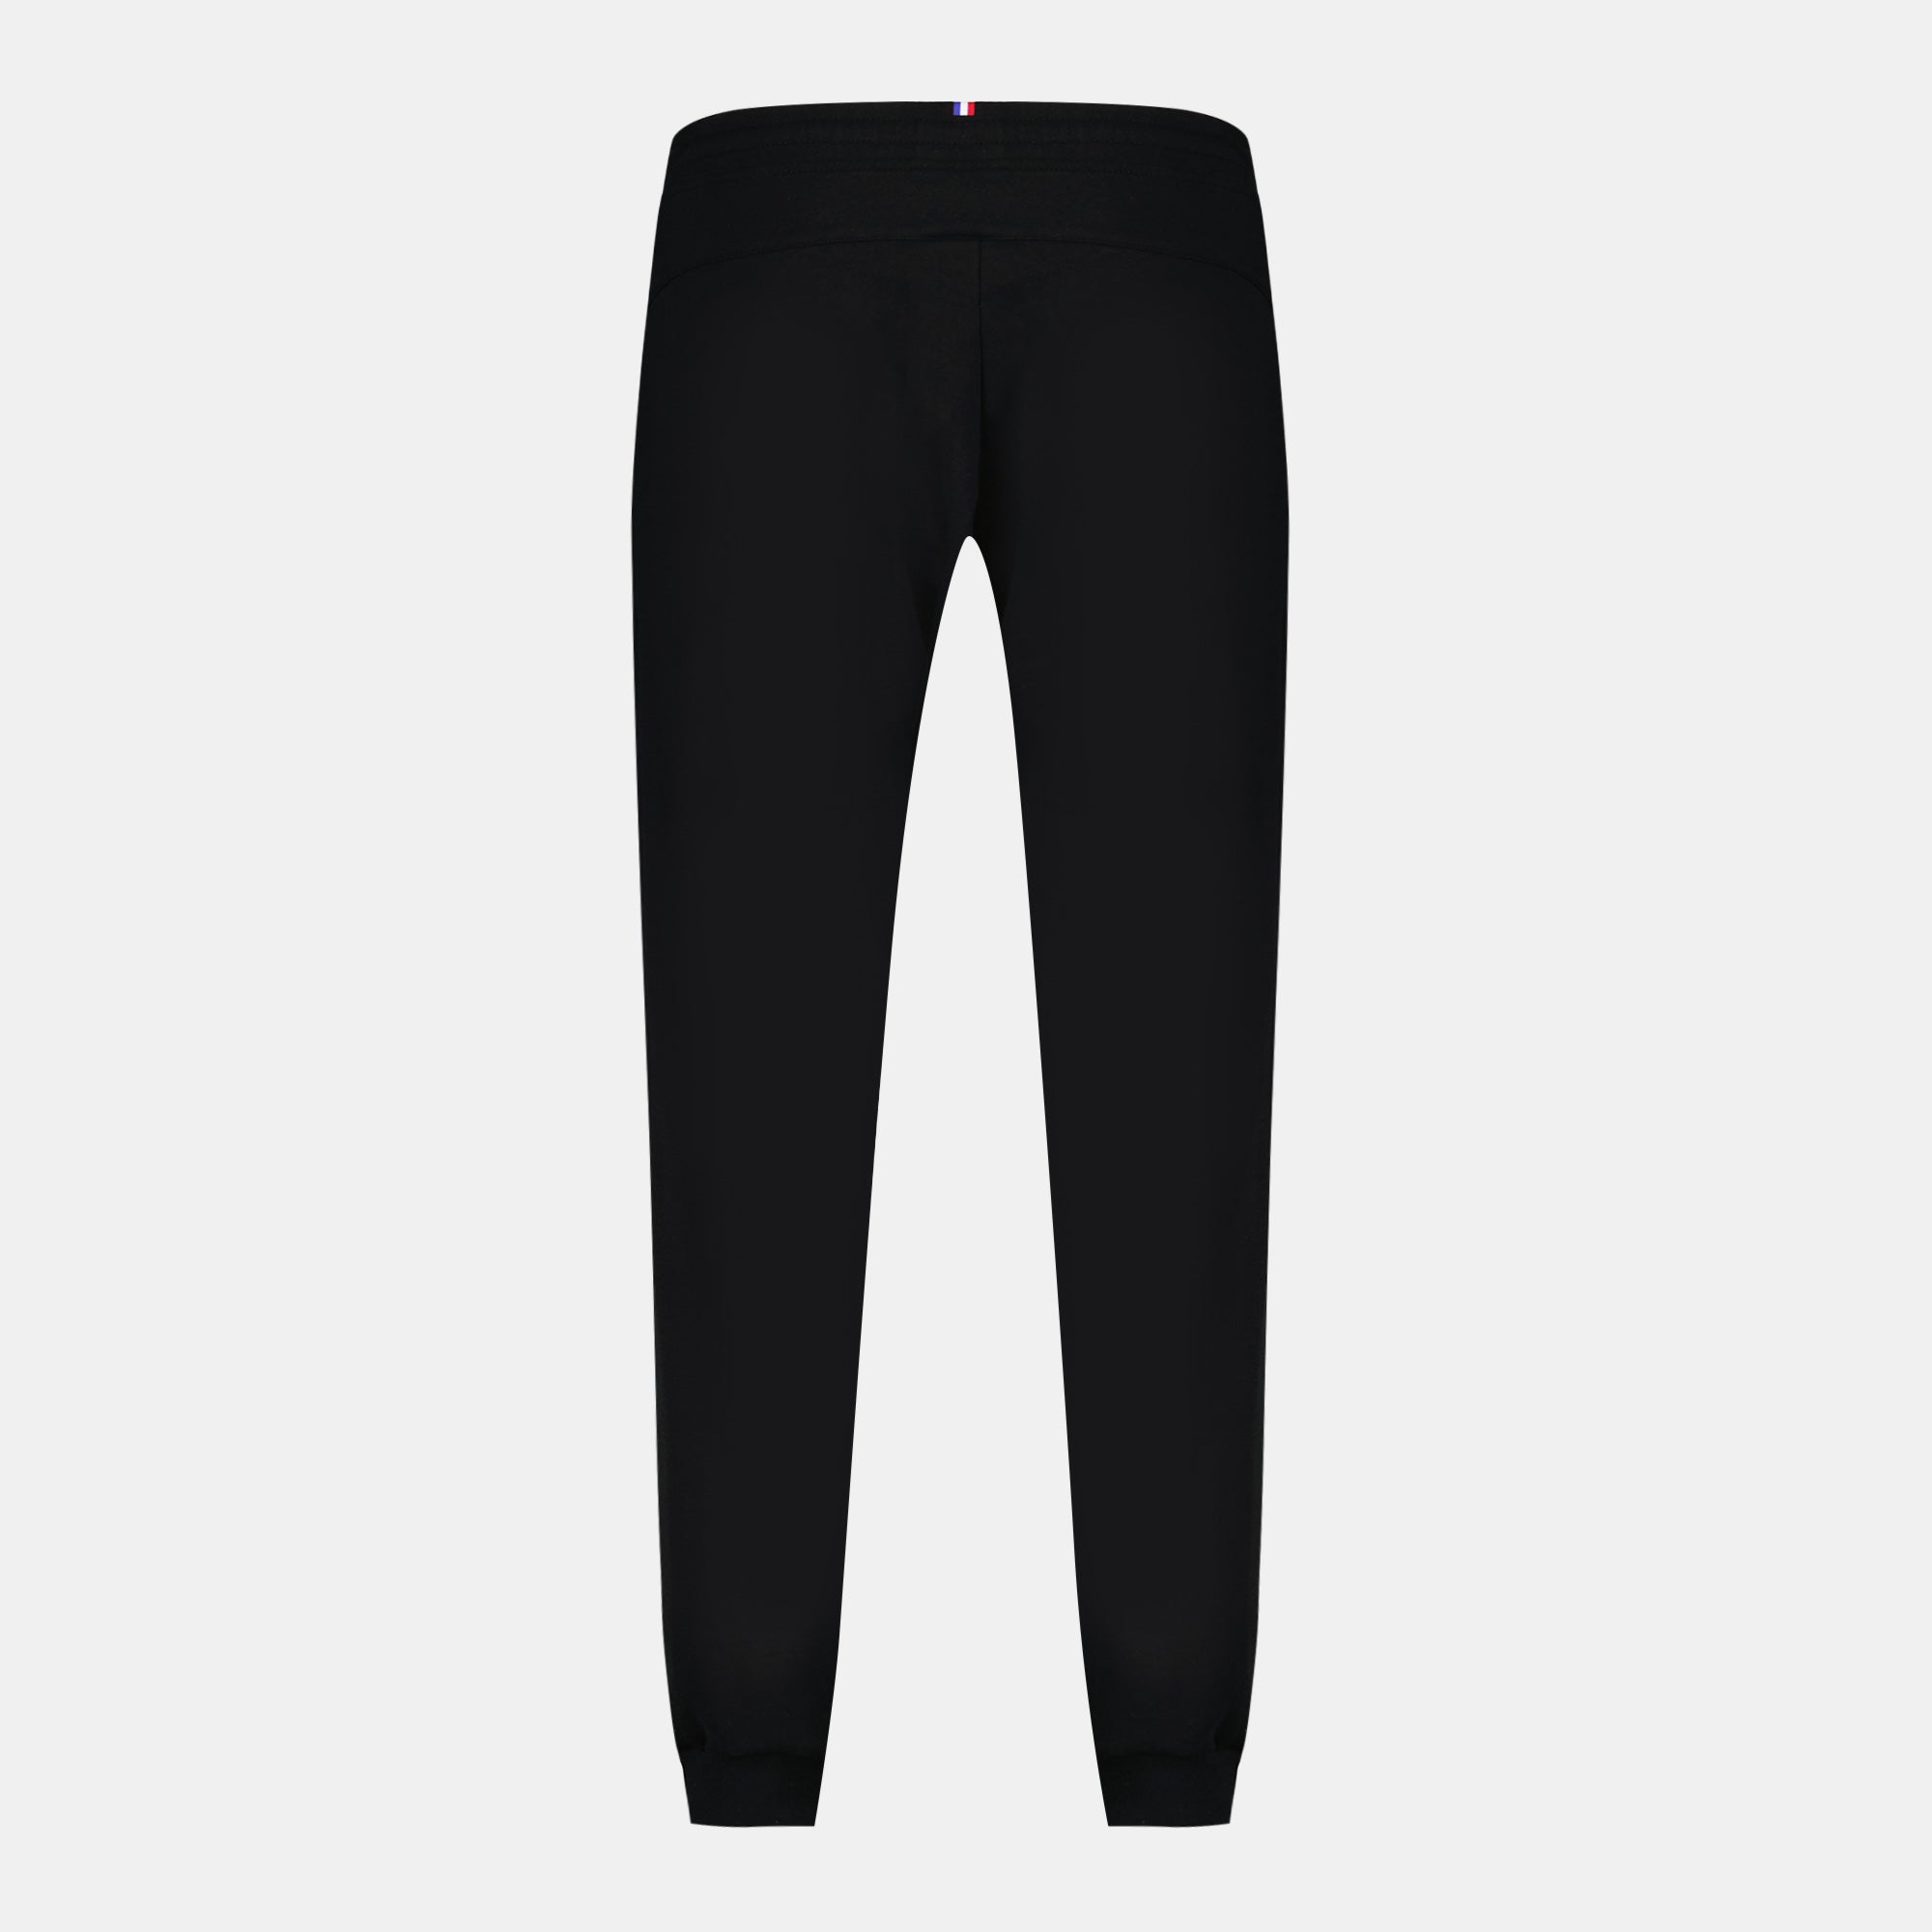 Nike Dry Women's Tapered Training Pants-Dark Grey Heather Lacrosse Bottoms  | Lowest Price Guaranteed